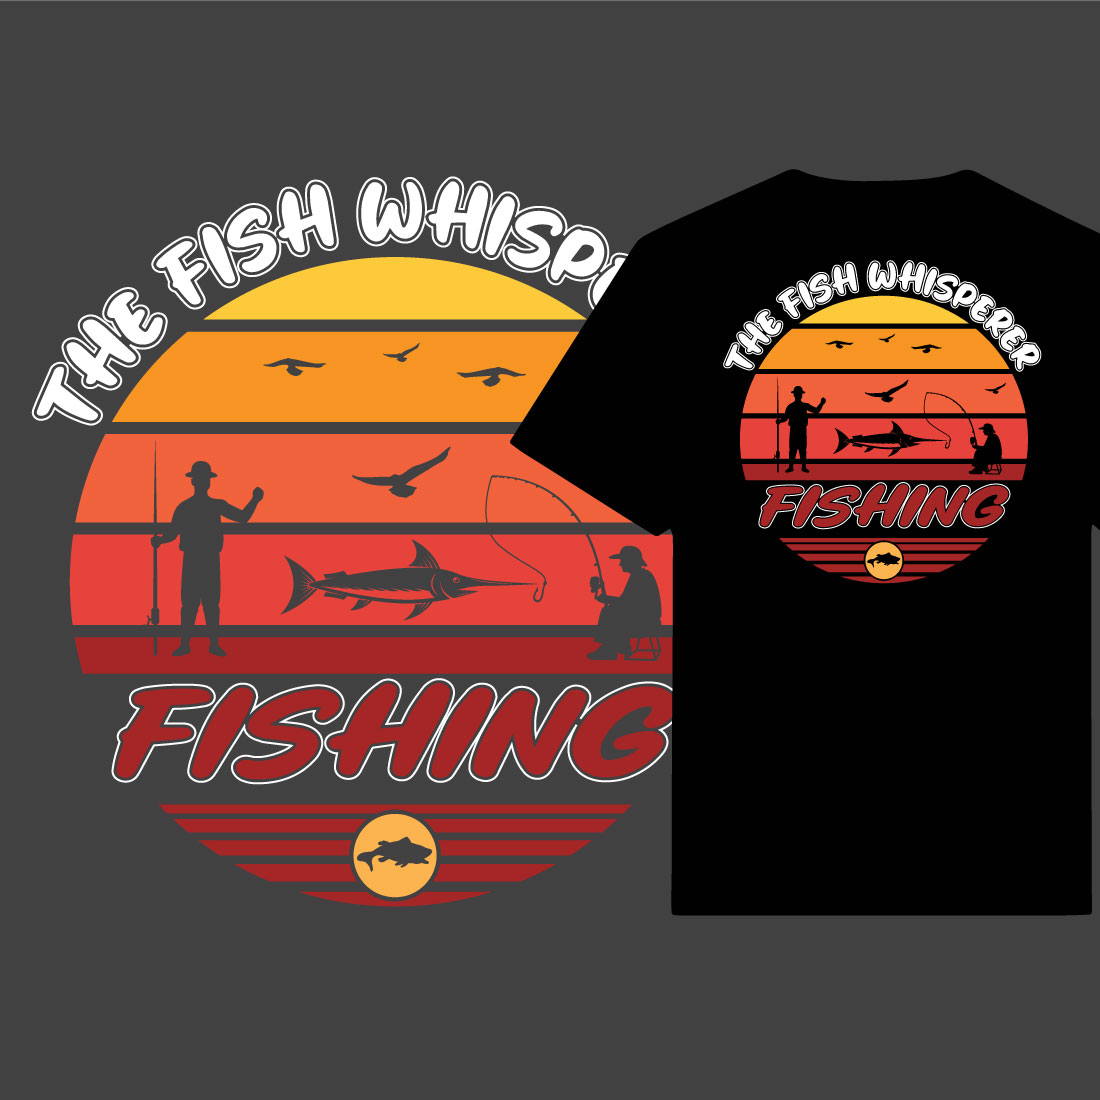 The Fish Whisperer Fishing T-shirt Design preview image.